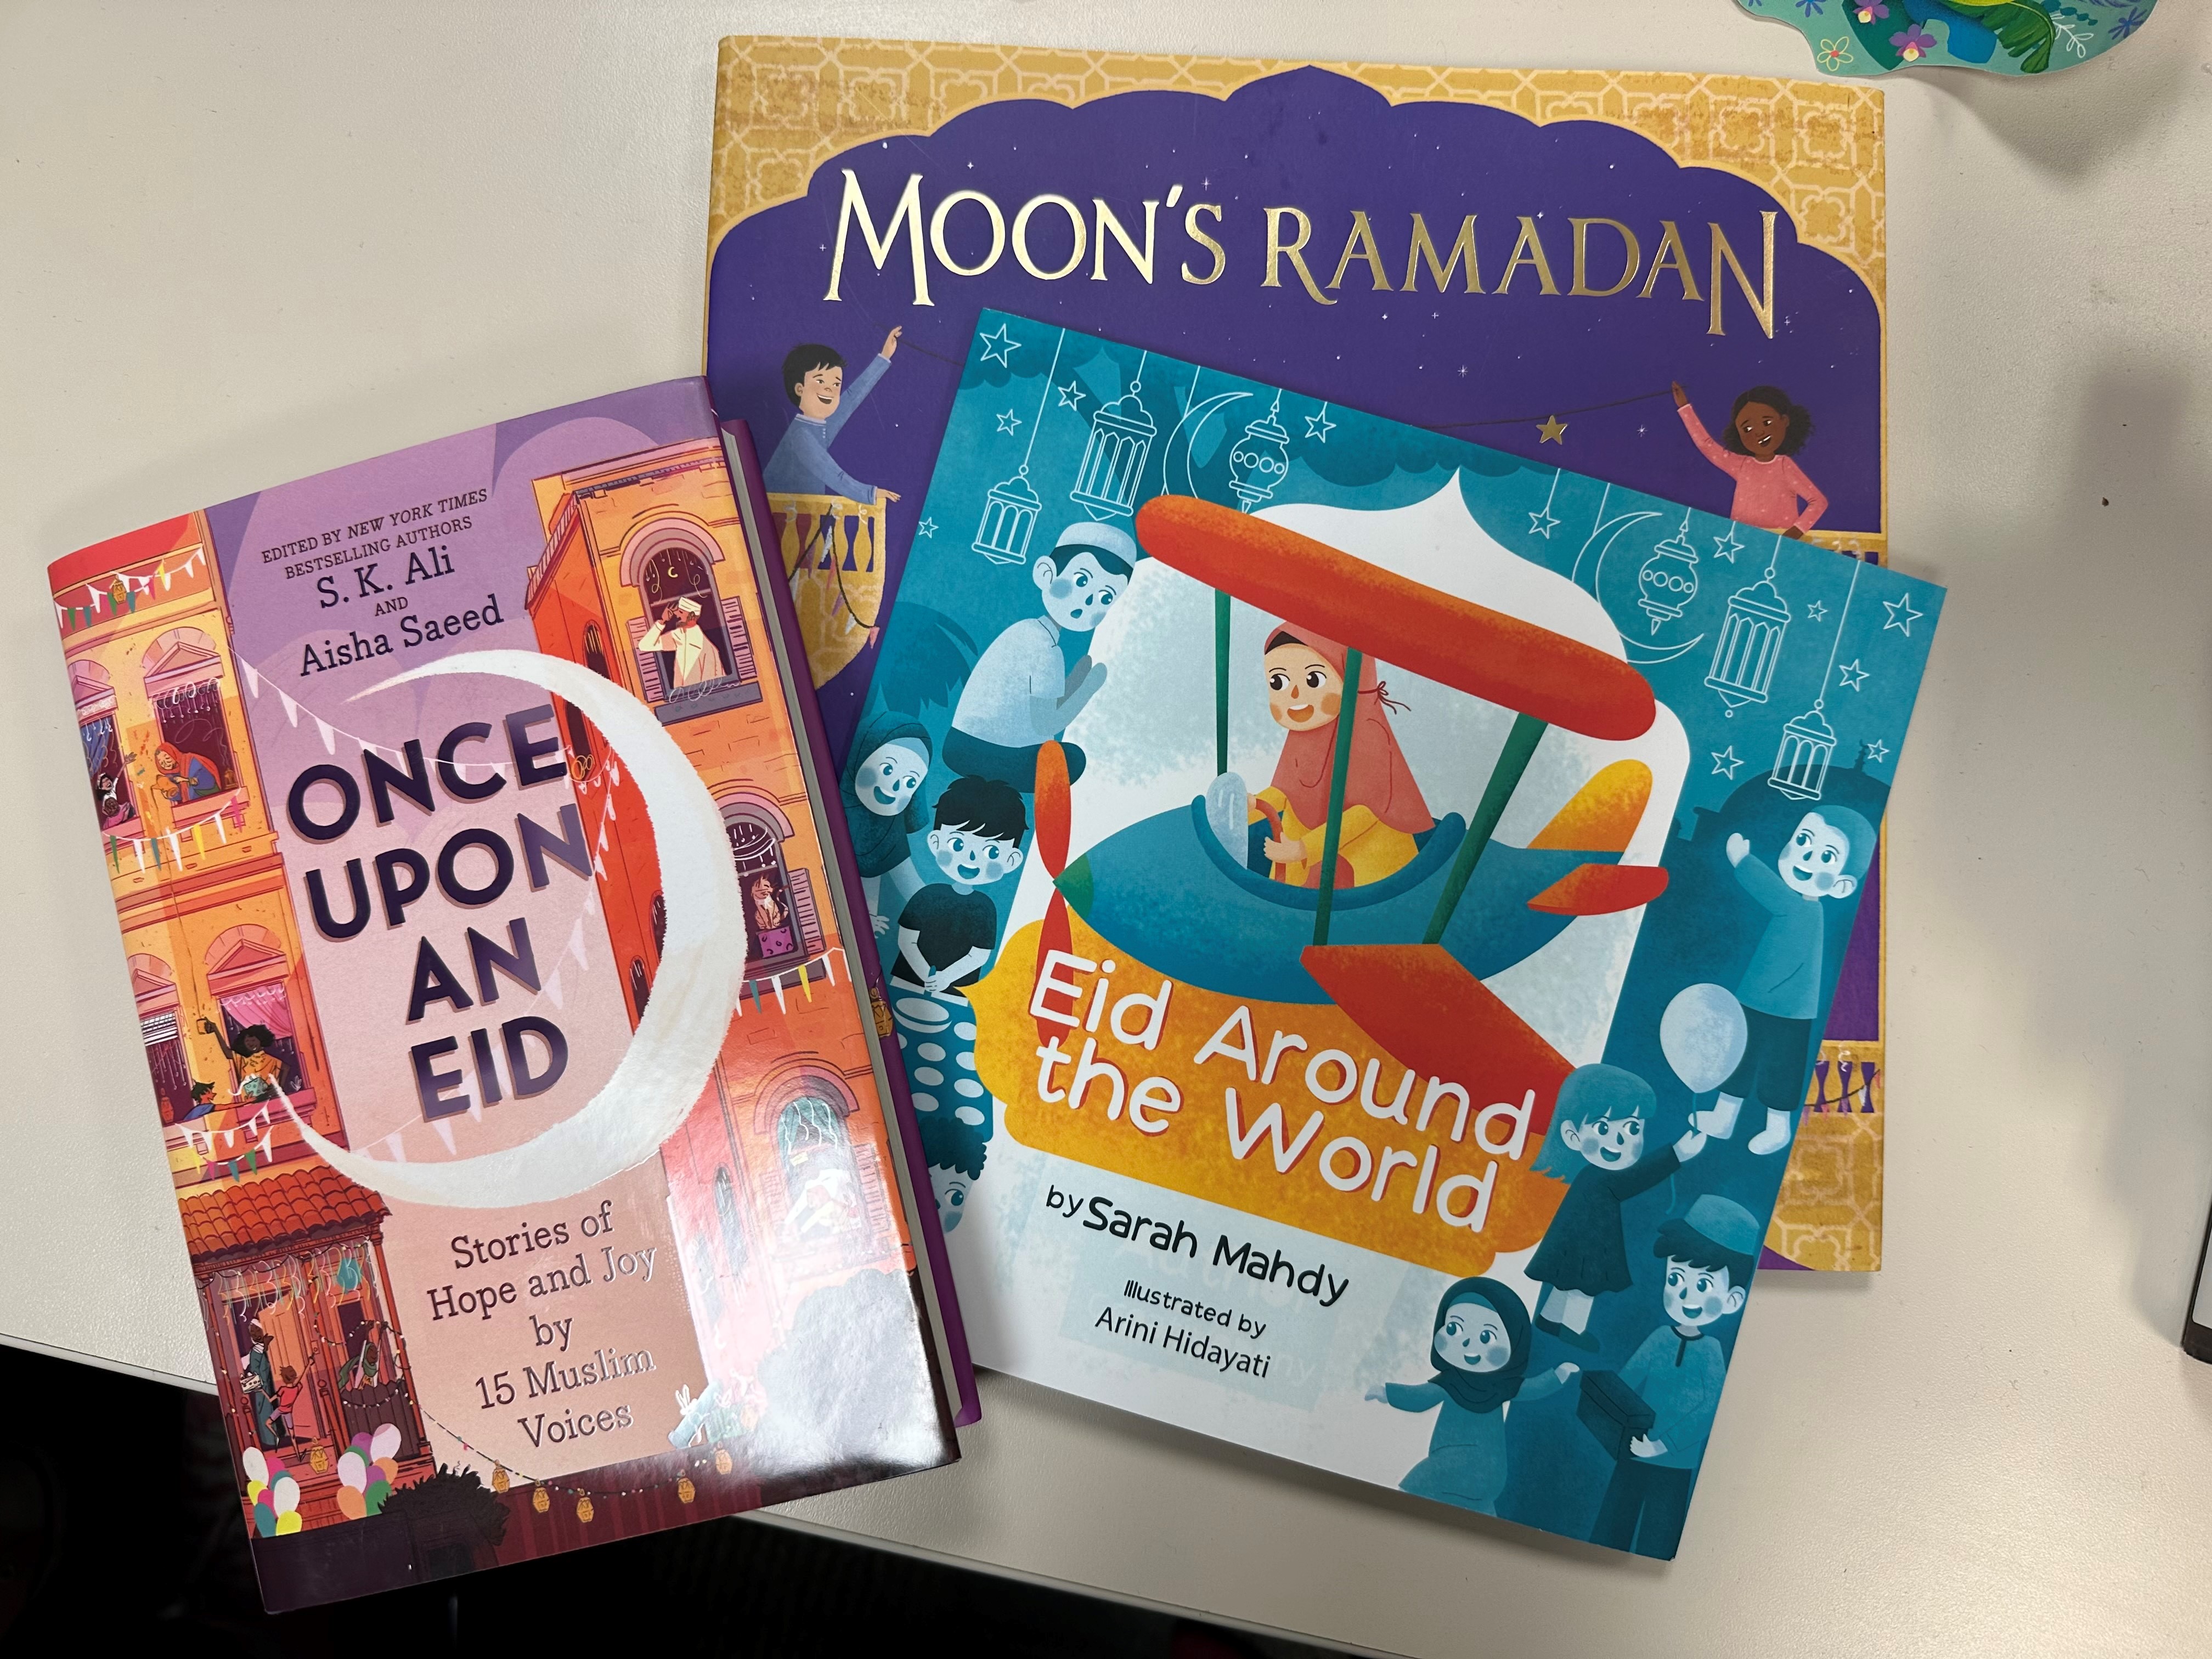 Eid Children's Books